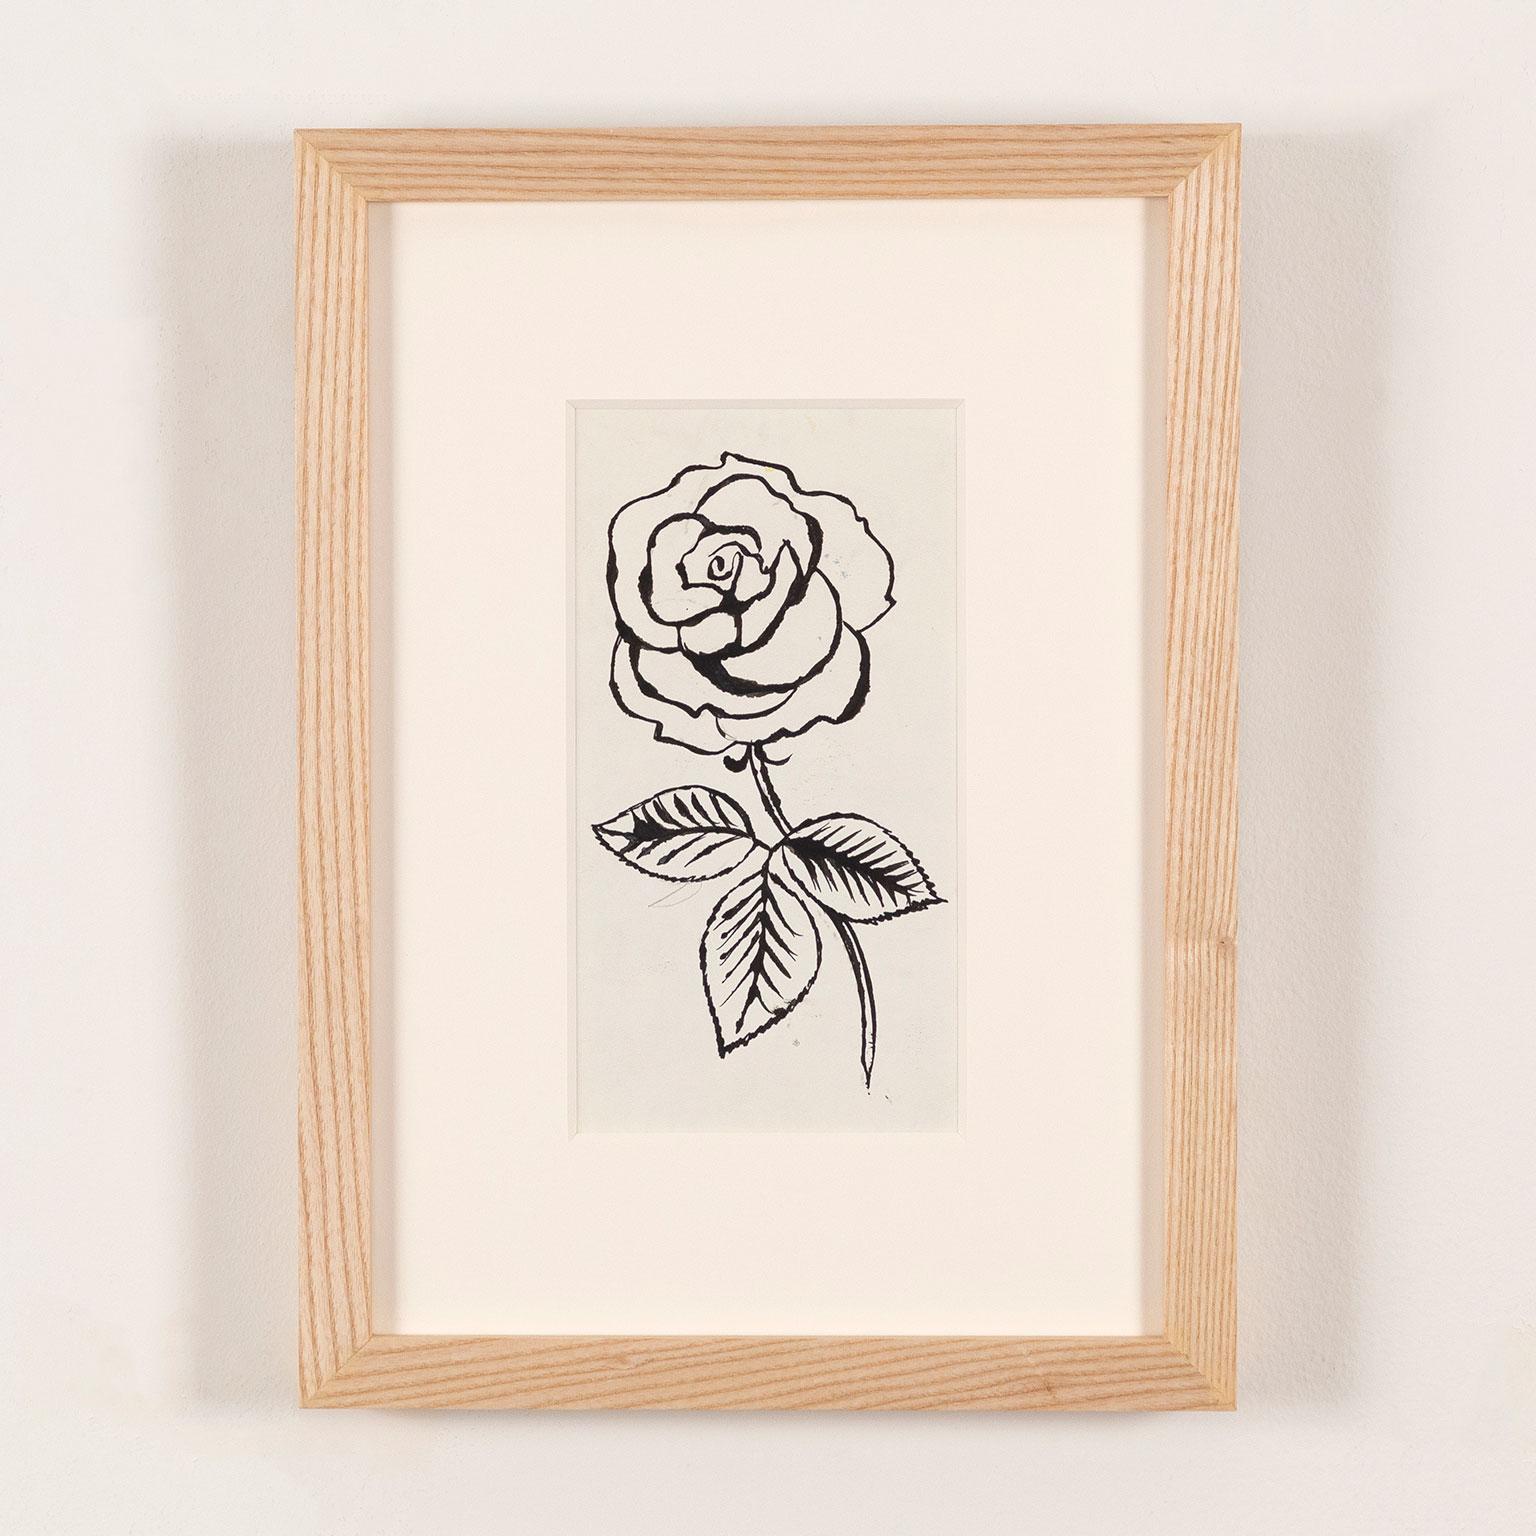 Andy Warhol Figurative Art – Rose